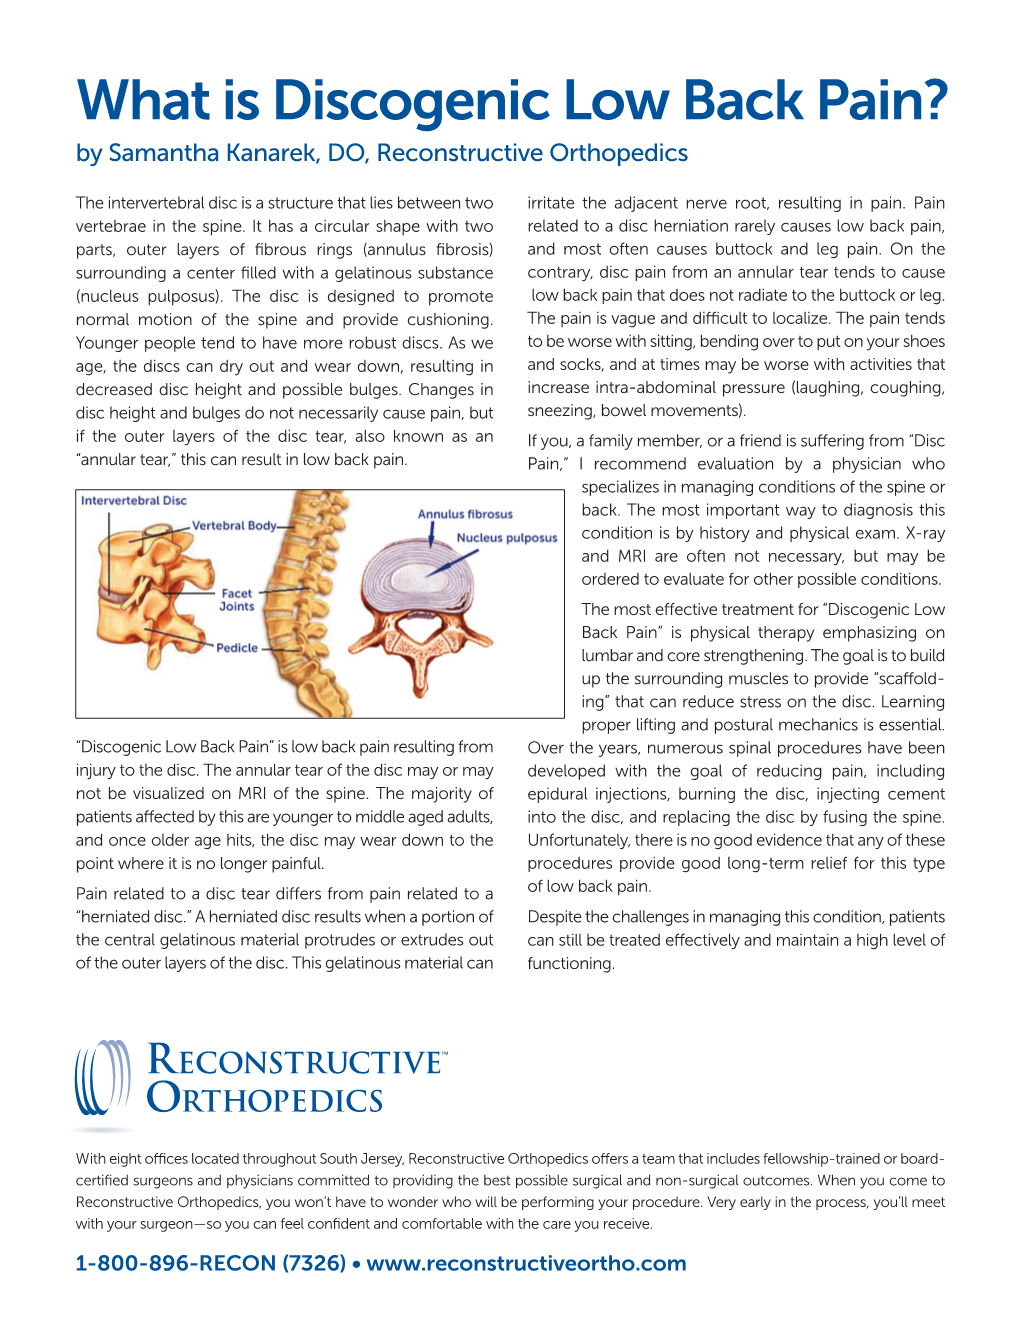 What Is Discogenic Low Back Pain? by Samantha Kanarek, DO, Reconstructive Orthopedics